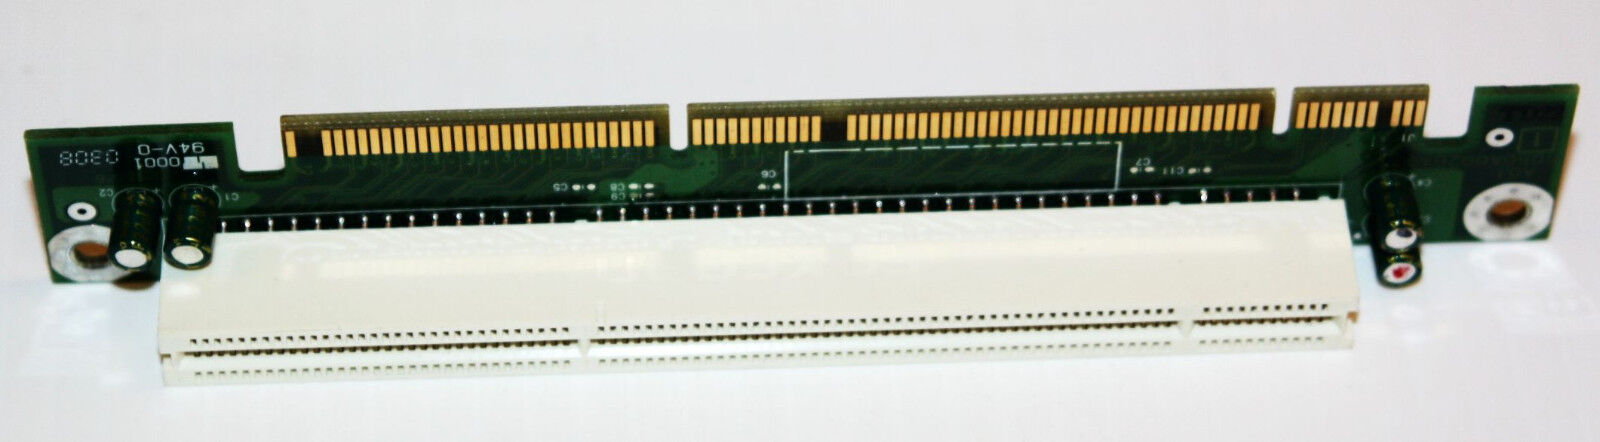 PCI Riser Board 293365-001 6050a0026401--HP Compaq Proliant DL320 1U Rack Server